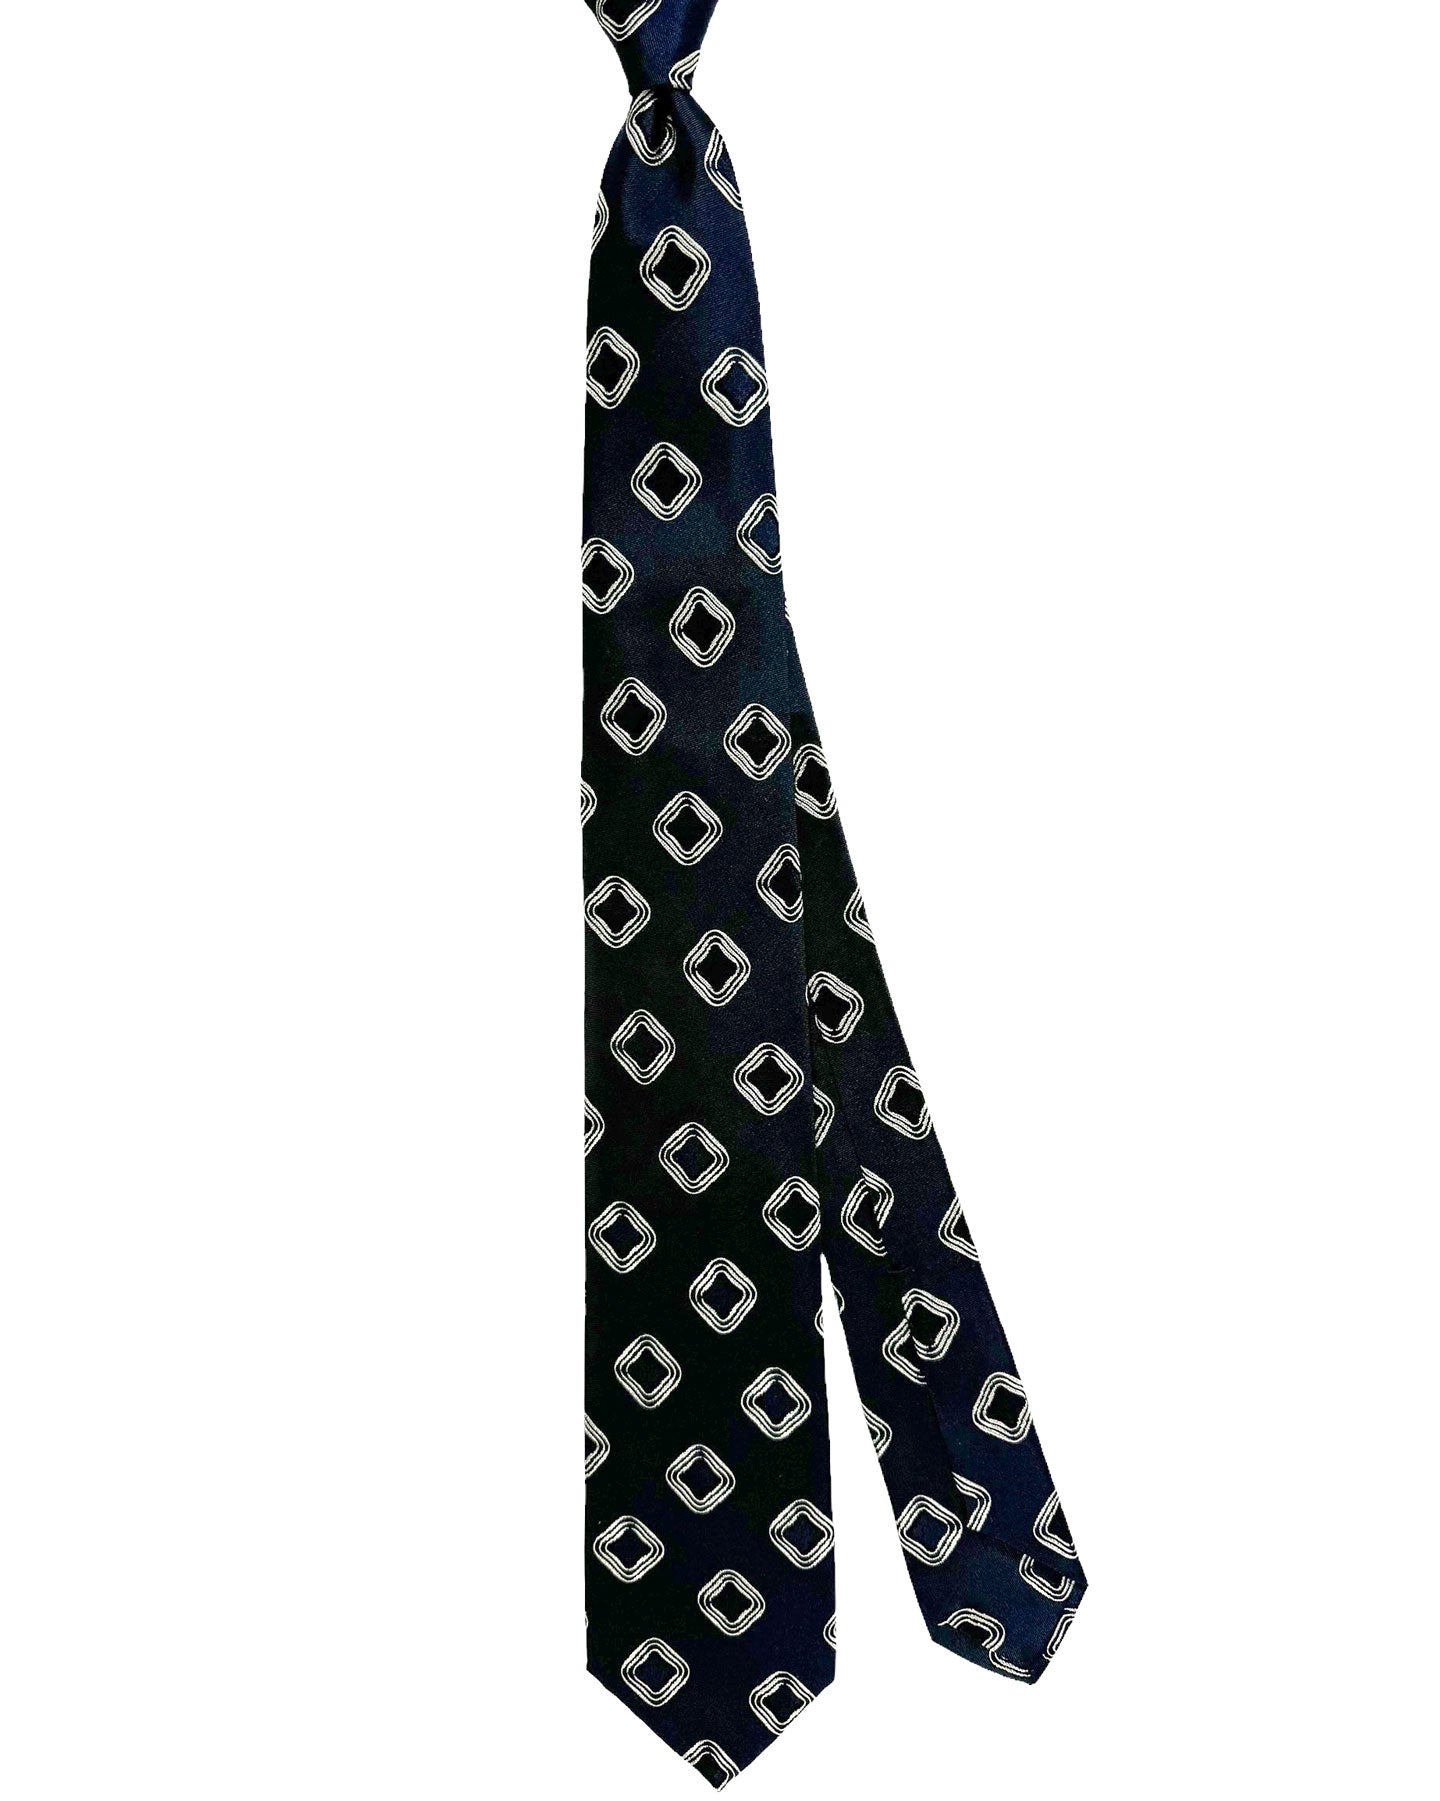 Barba Sevenfold Tie Dark Blue Silver Geometric Design - Sartorial Neckwear